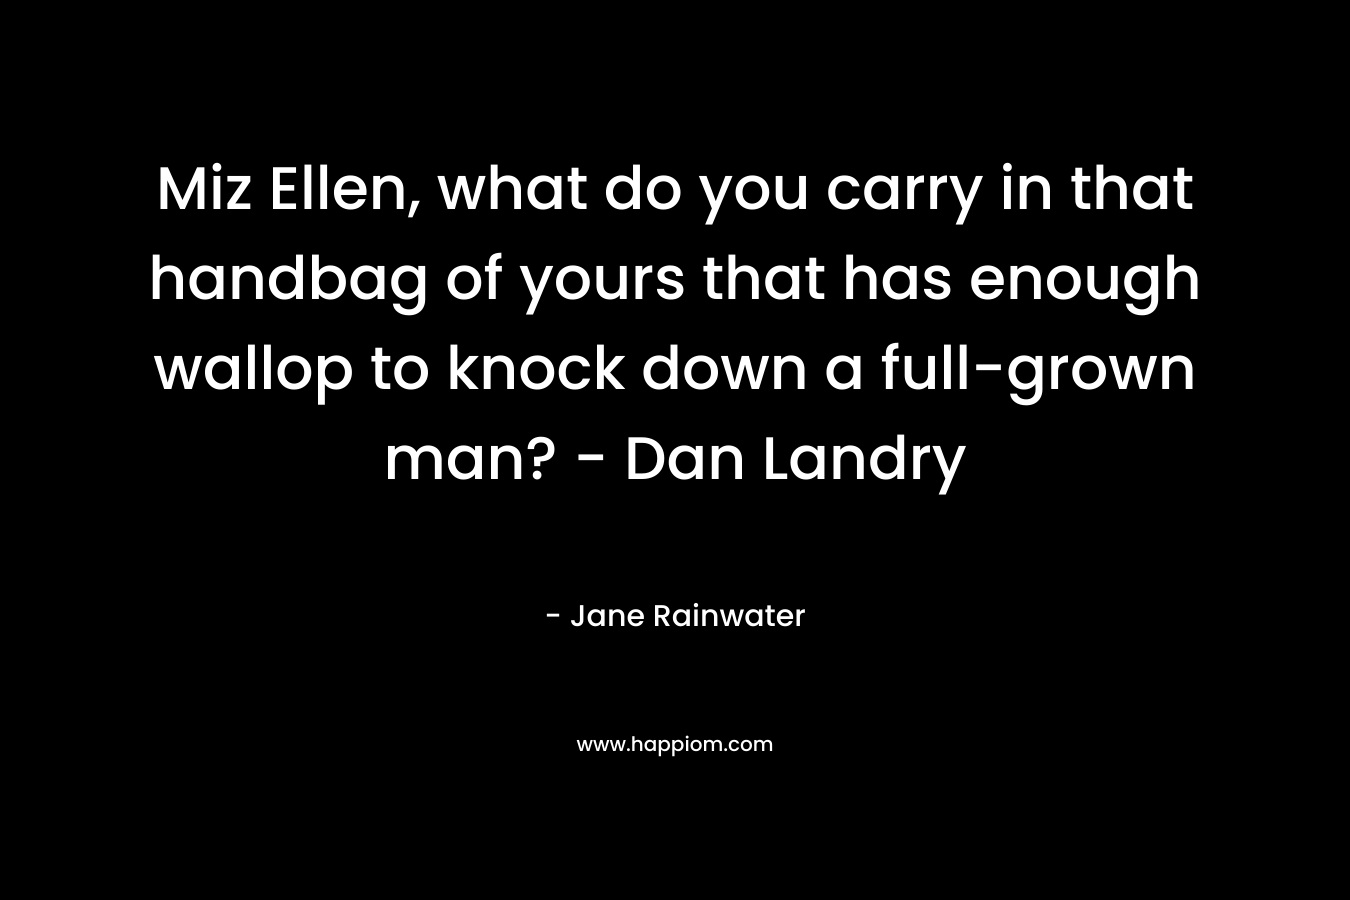 Miz Ellen, what do you carry in that handbag of yours that has enough wallop to knock down a full-grown man? - Dan Landry